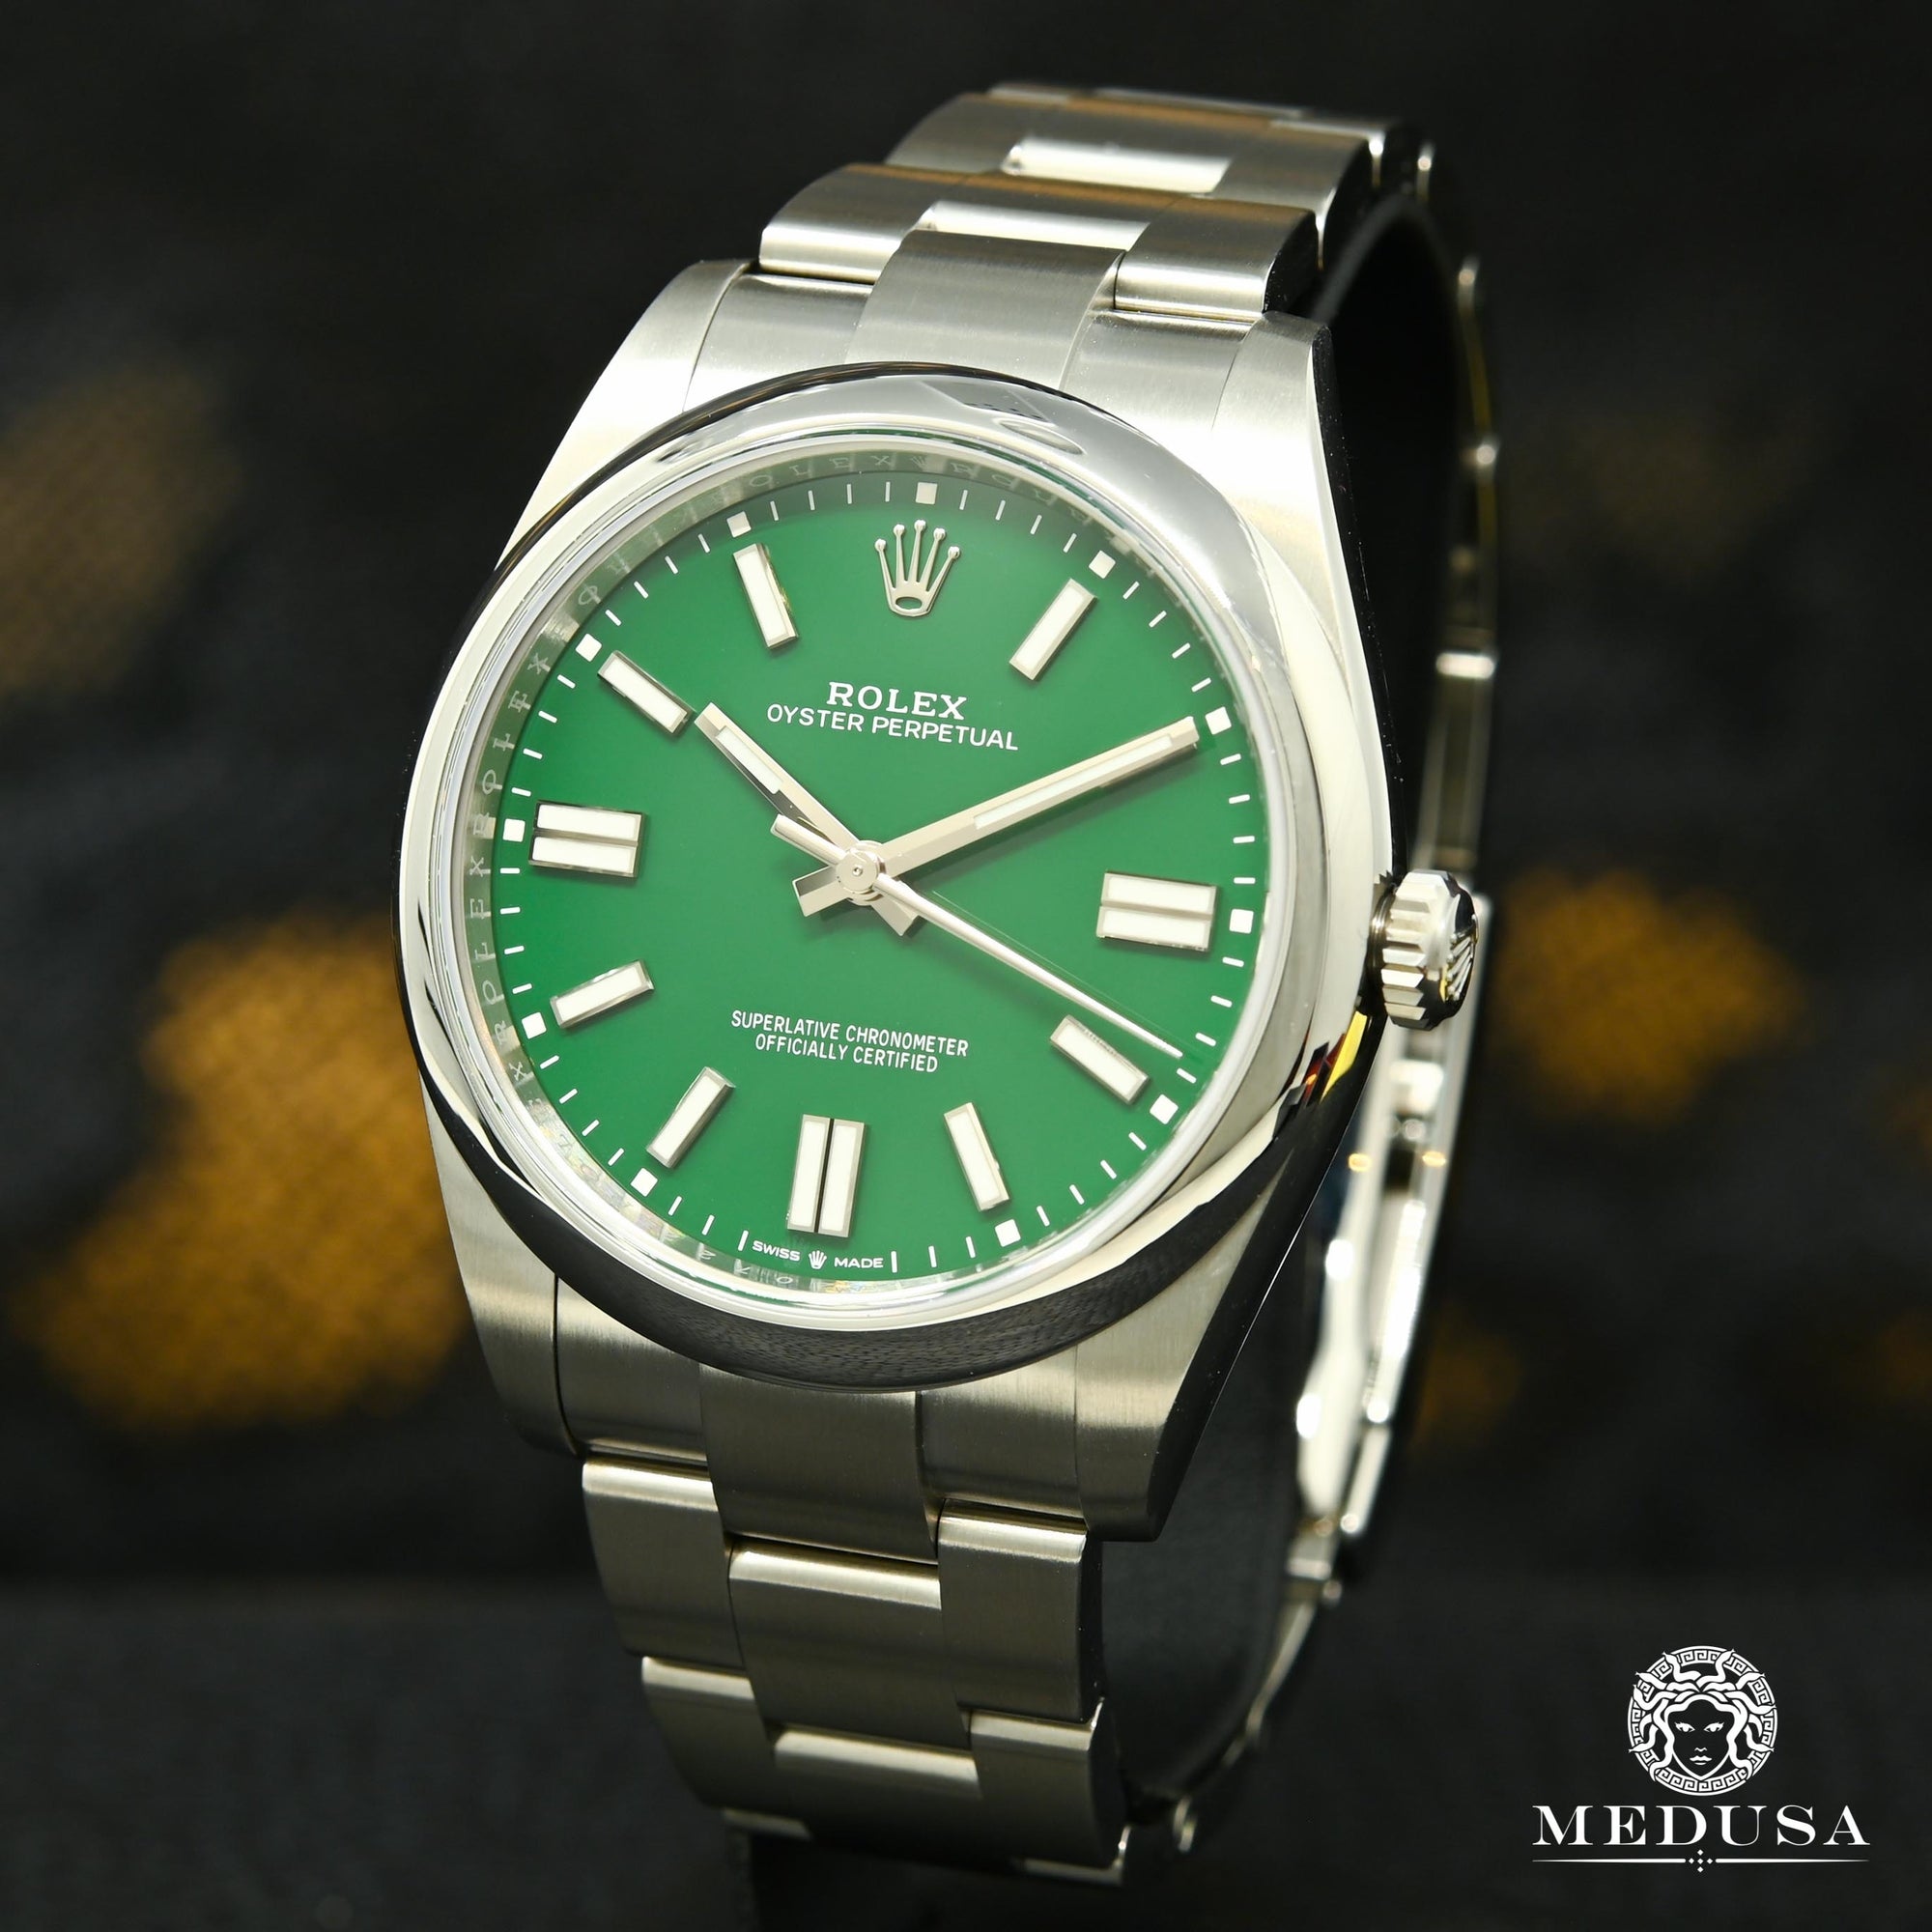 Rolex watch | Rolex Oyster Perpetual 41mm Men's Watch - Green Stainless